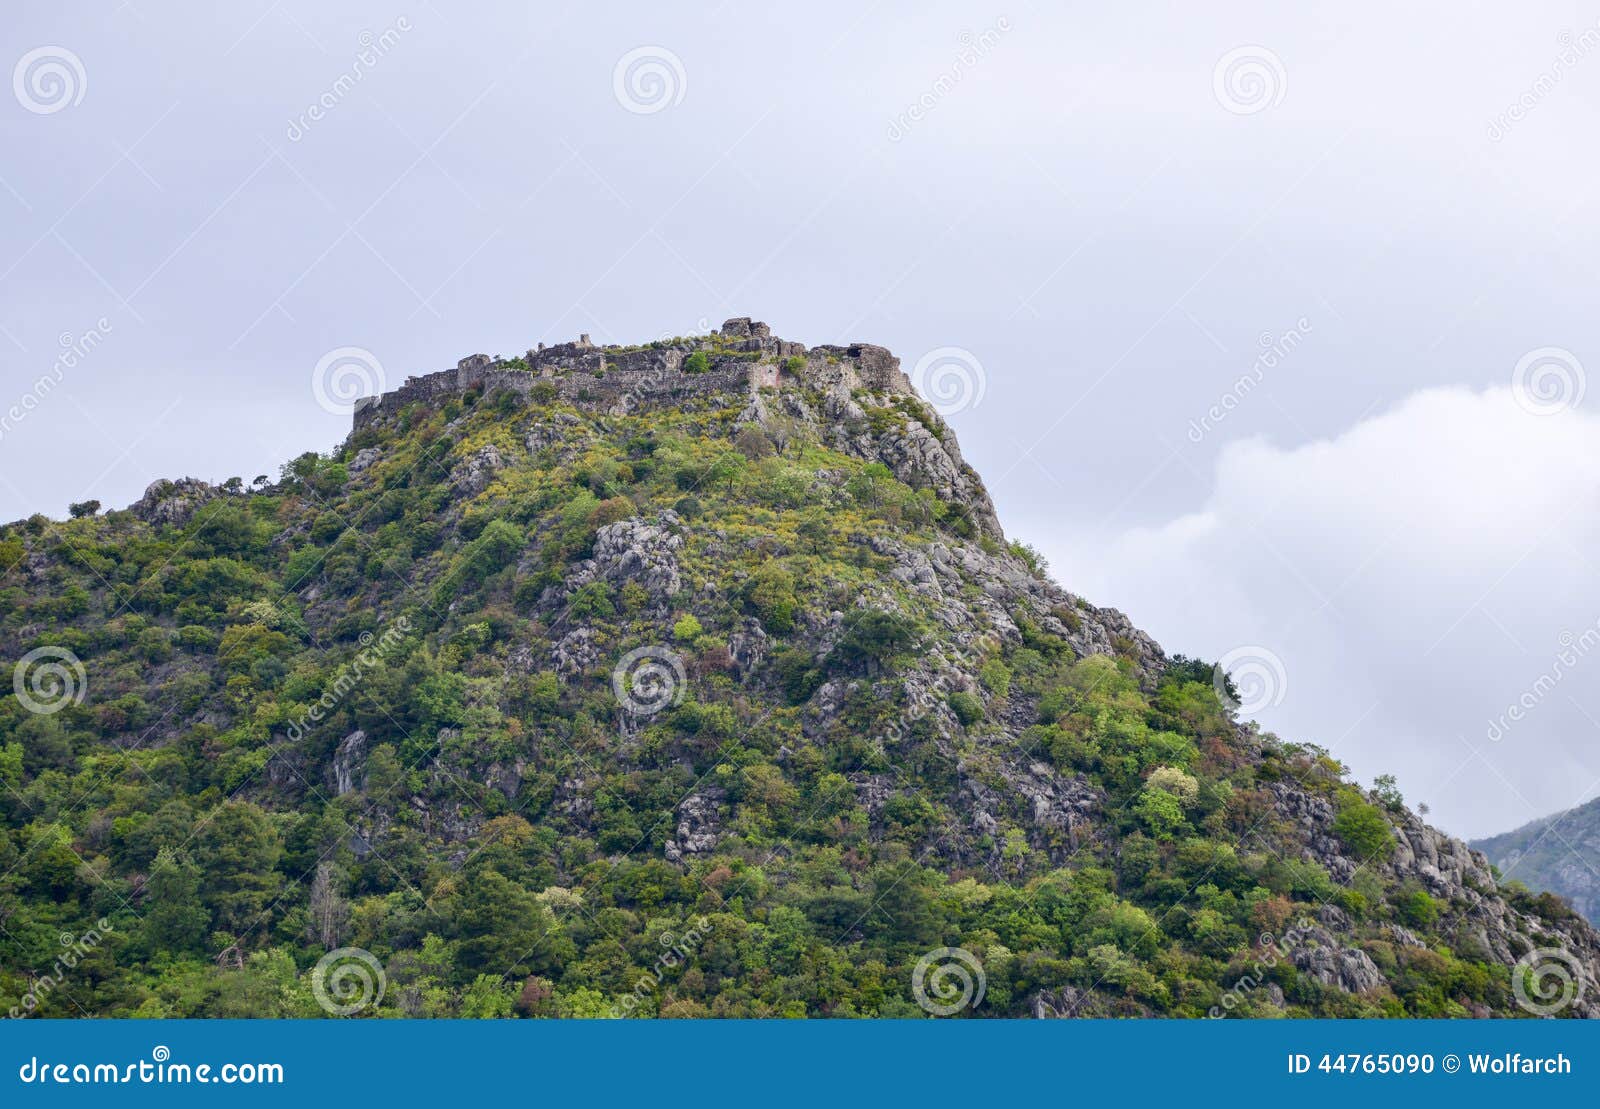 haj-nehaj fortress above sutomore, montenegro